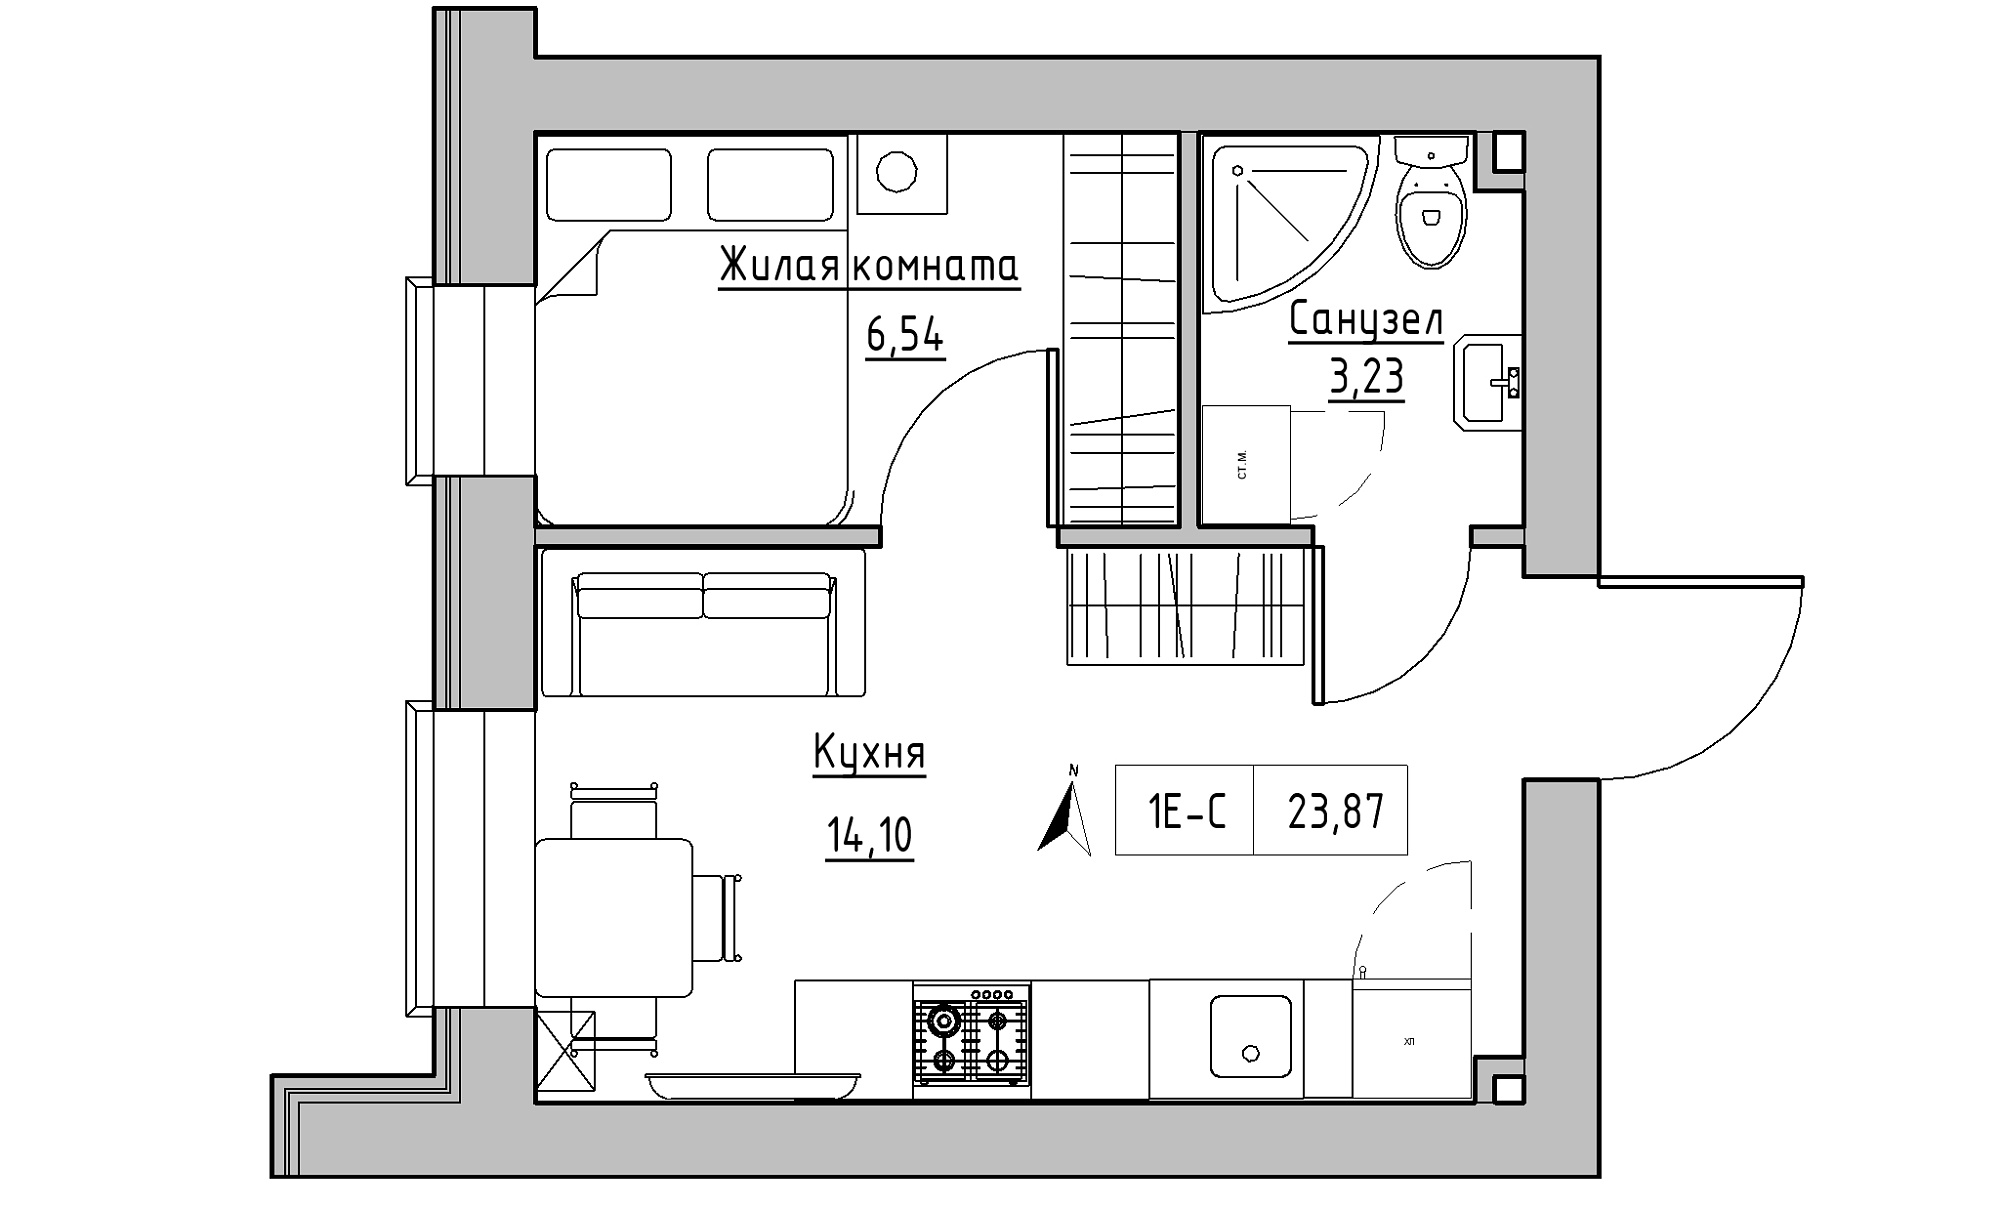 Planning 1-rm flats area 23.87m2, KS-016-05/0015.